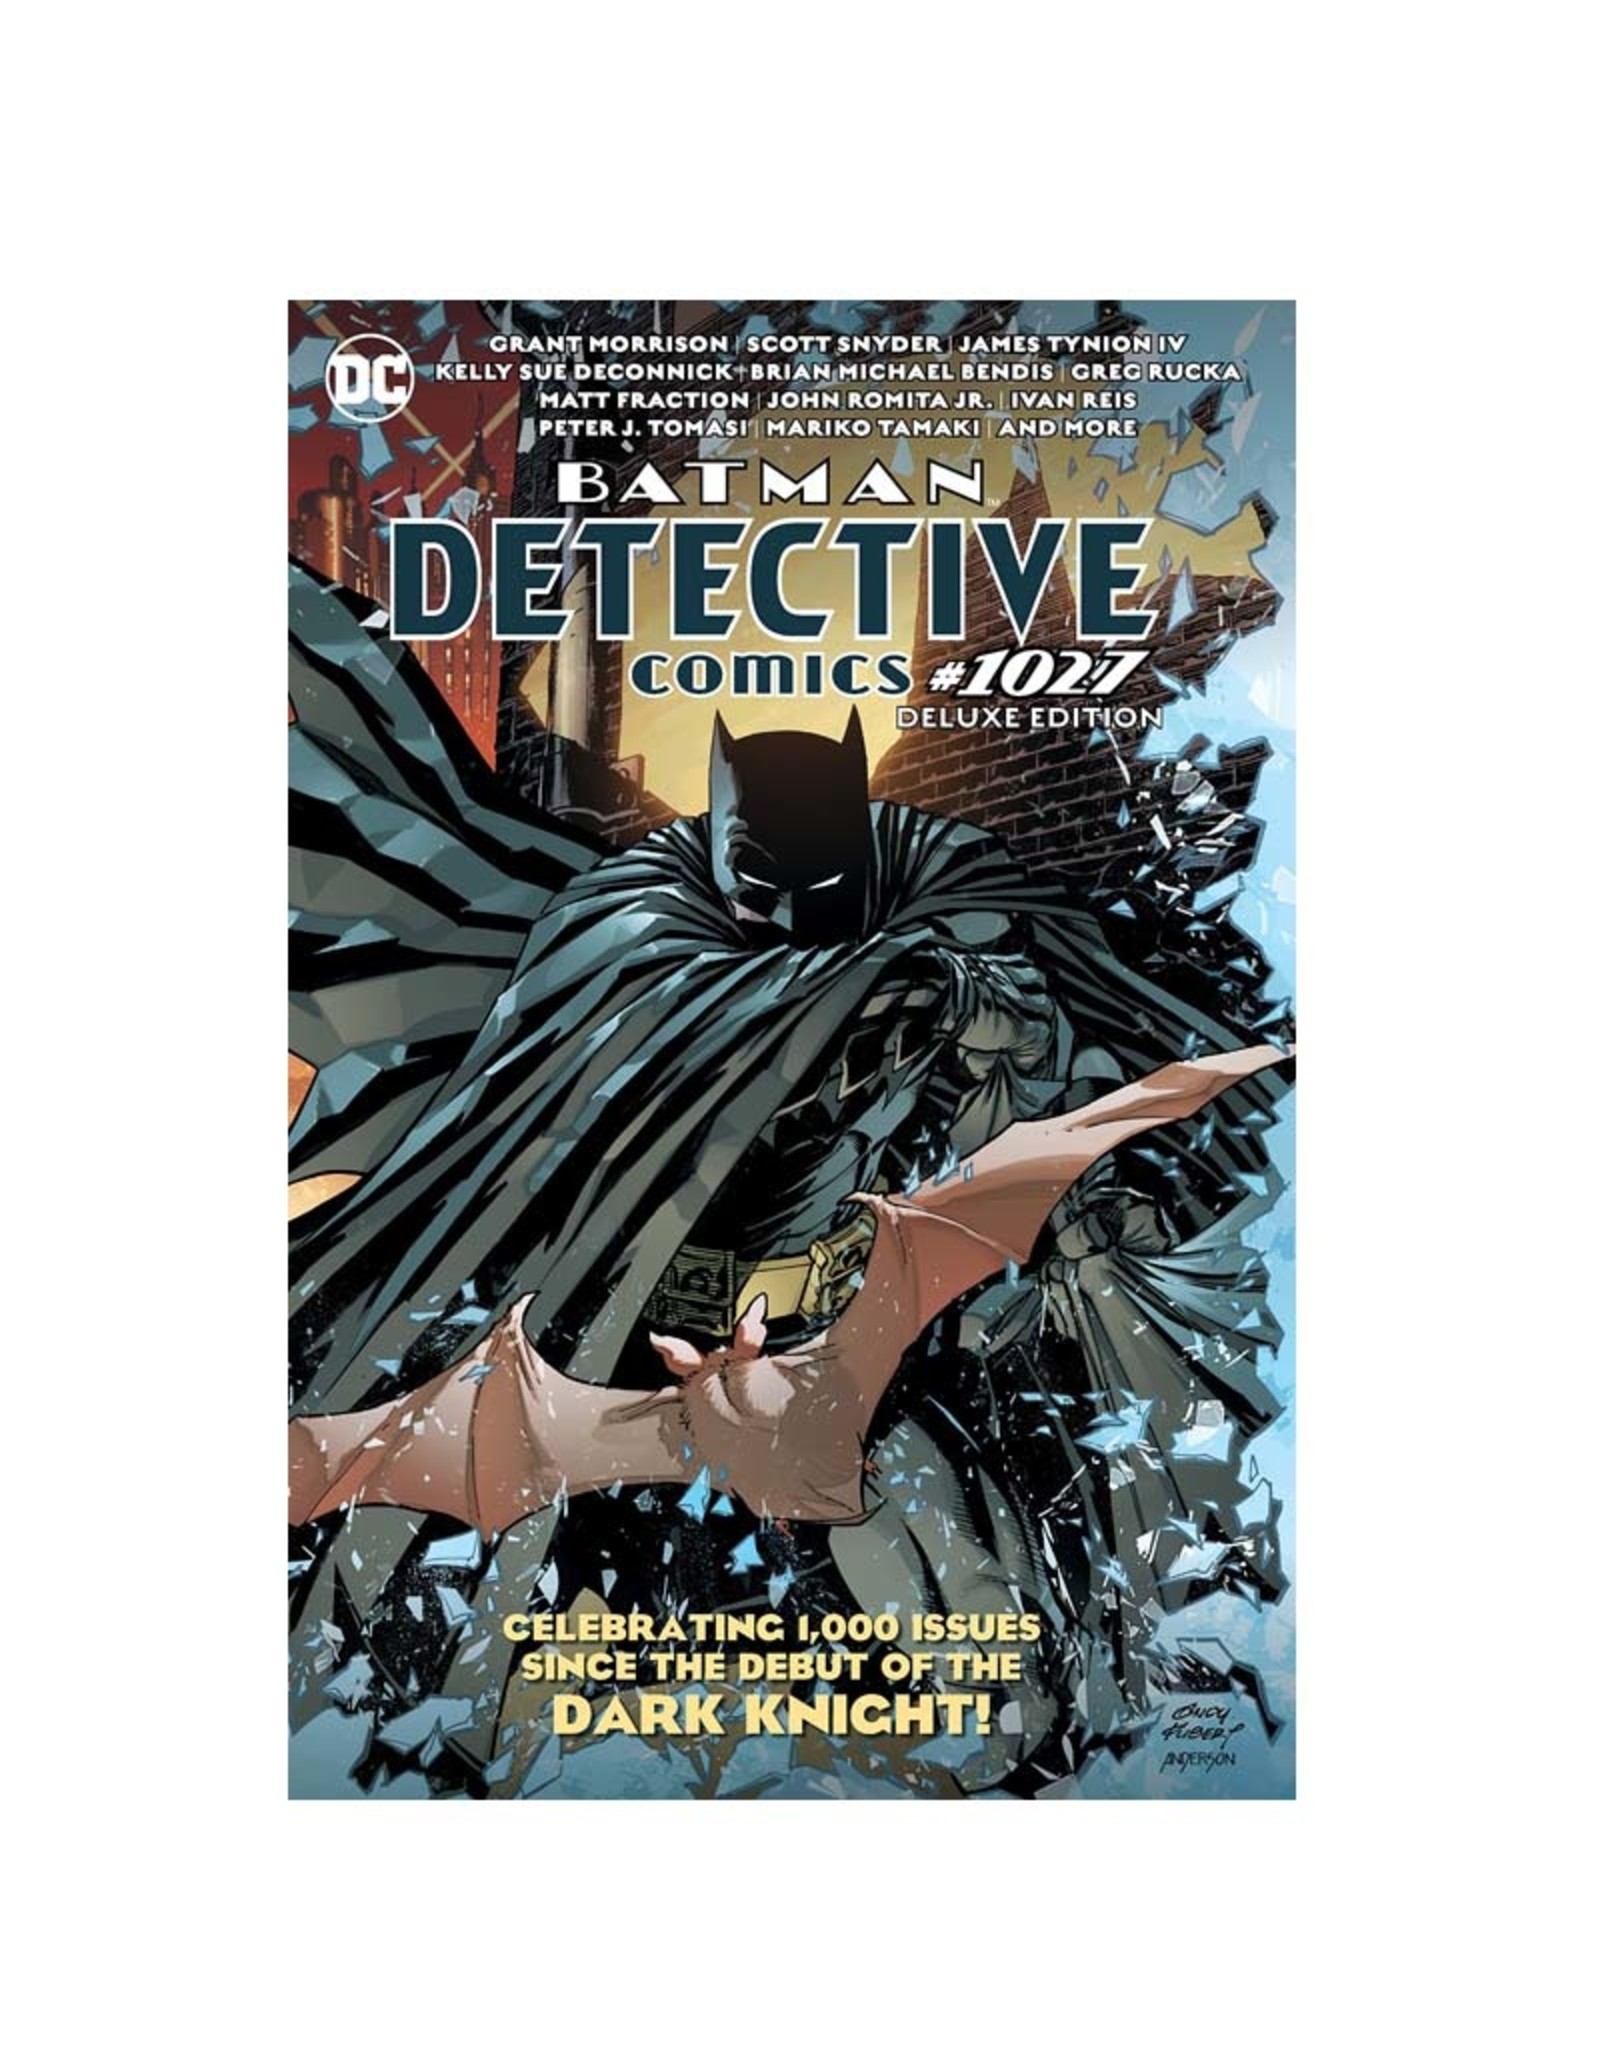 DC Comics Batman Detective Comics #1027 The Deluxe Edition Hardcover